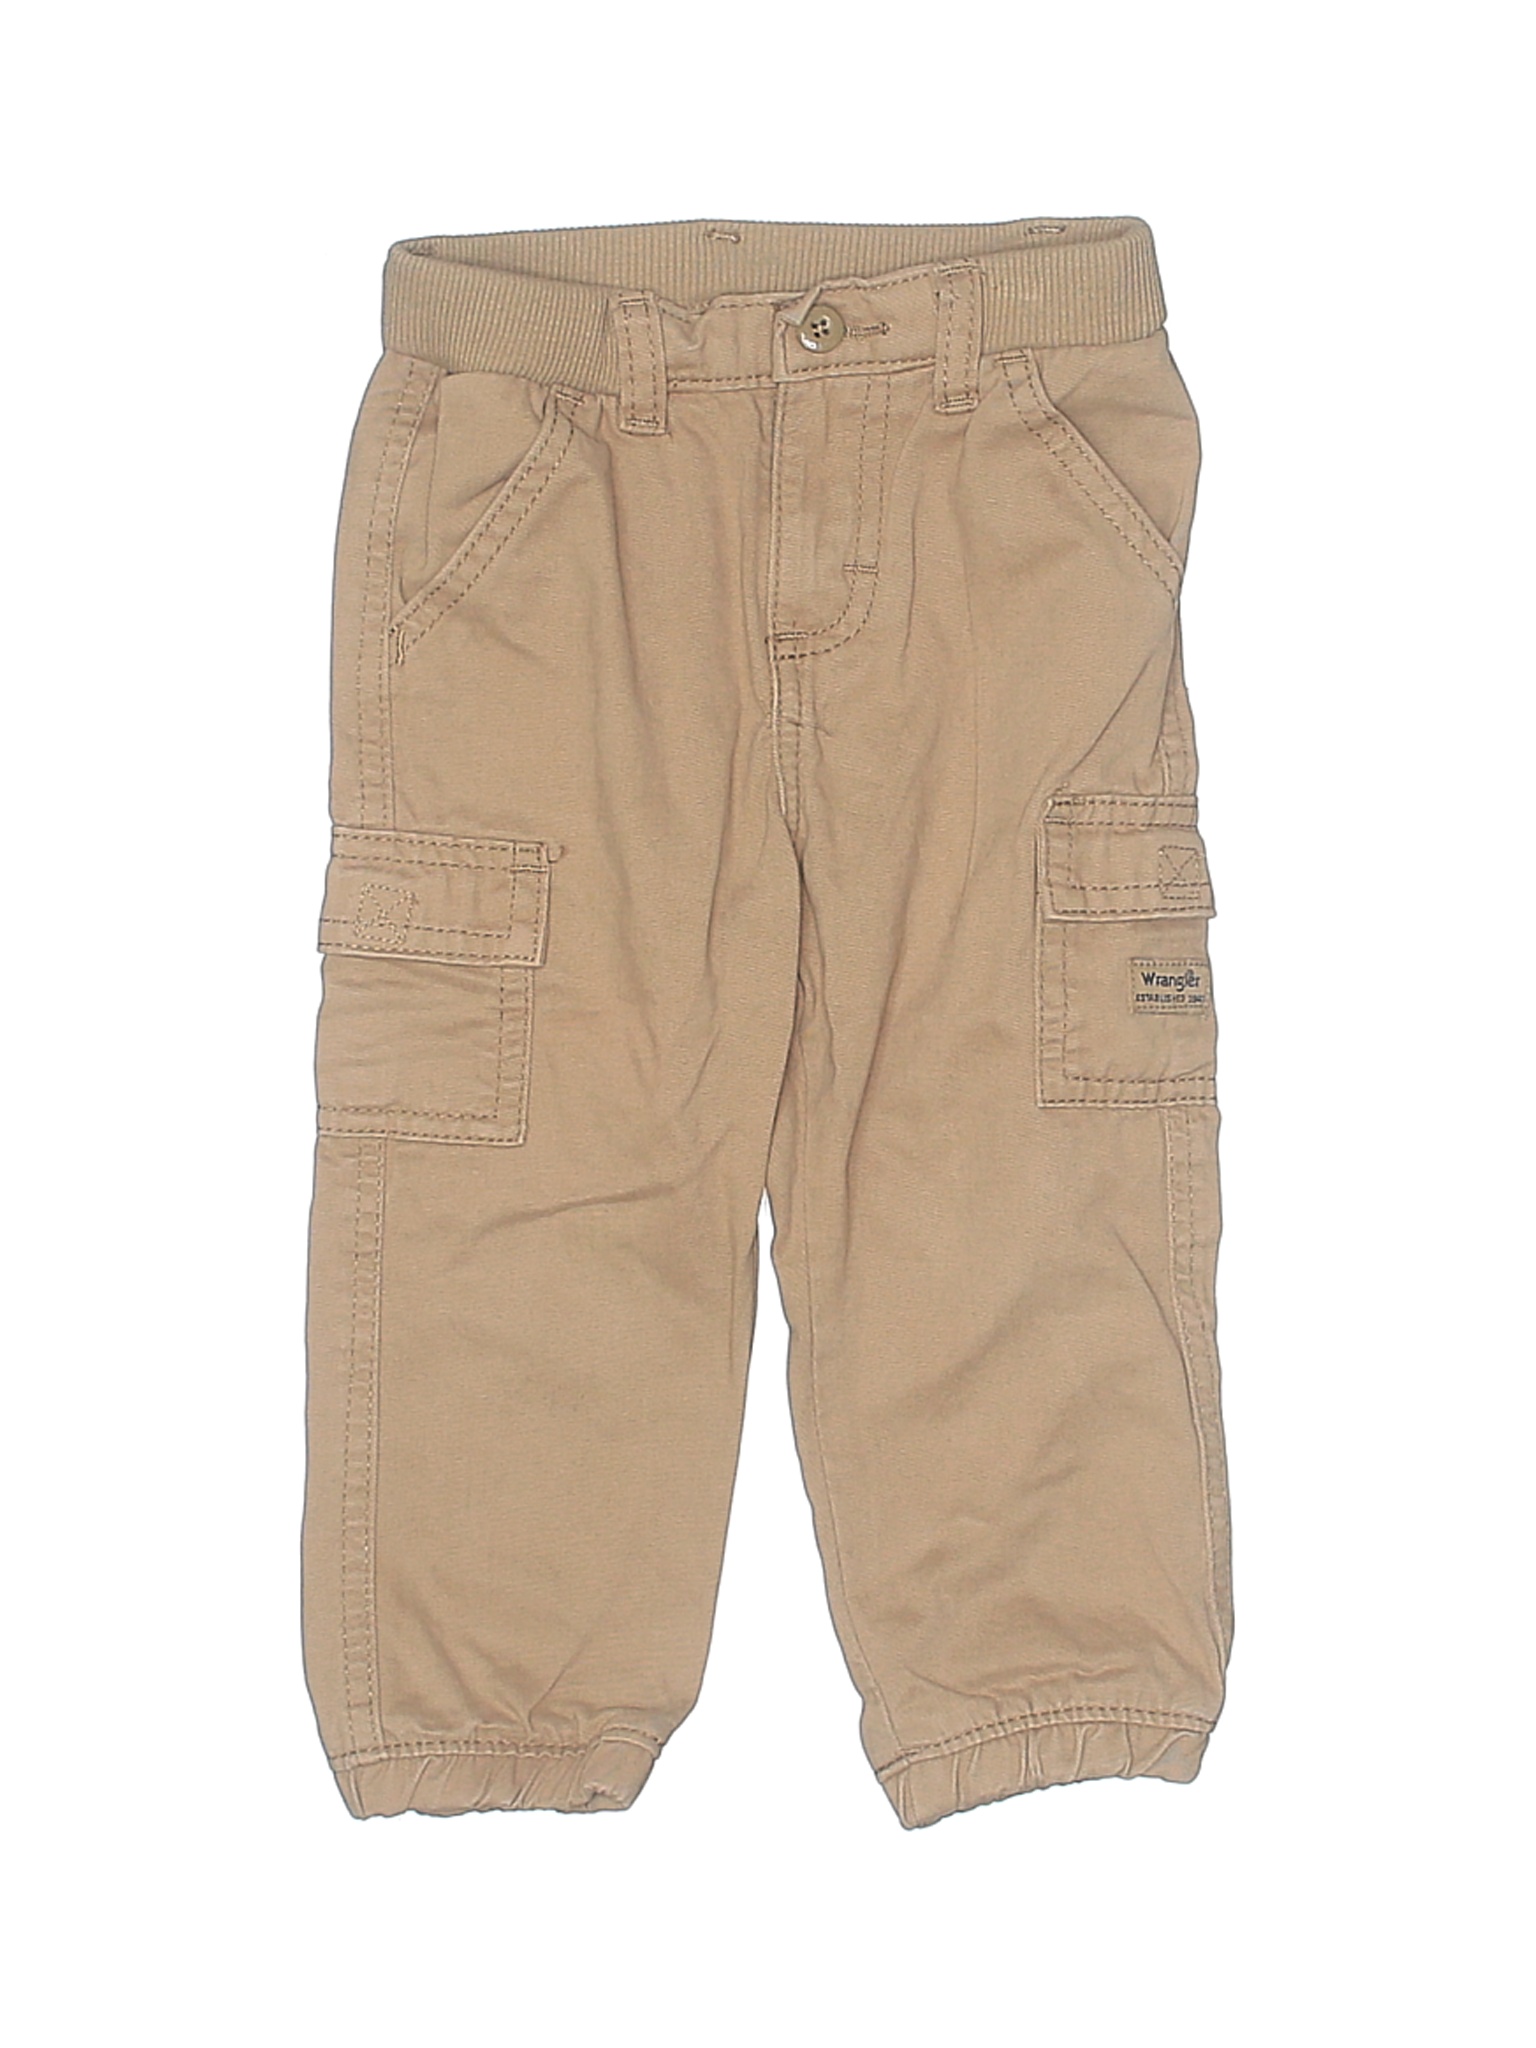 Wrangler Jeans Co Boys Brown Cargo Pants 2T | eBay